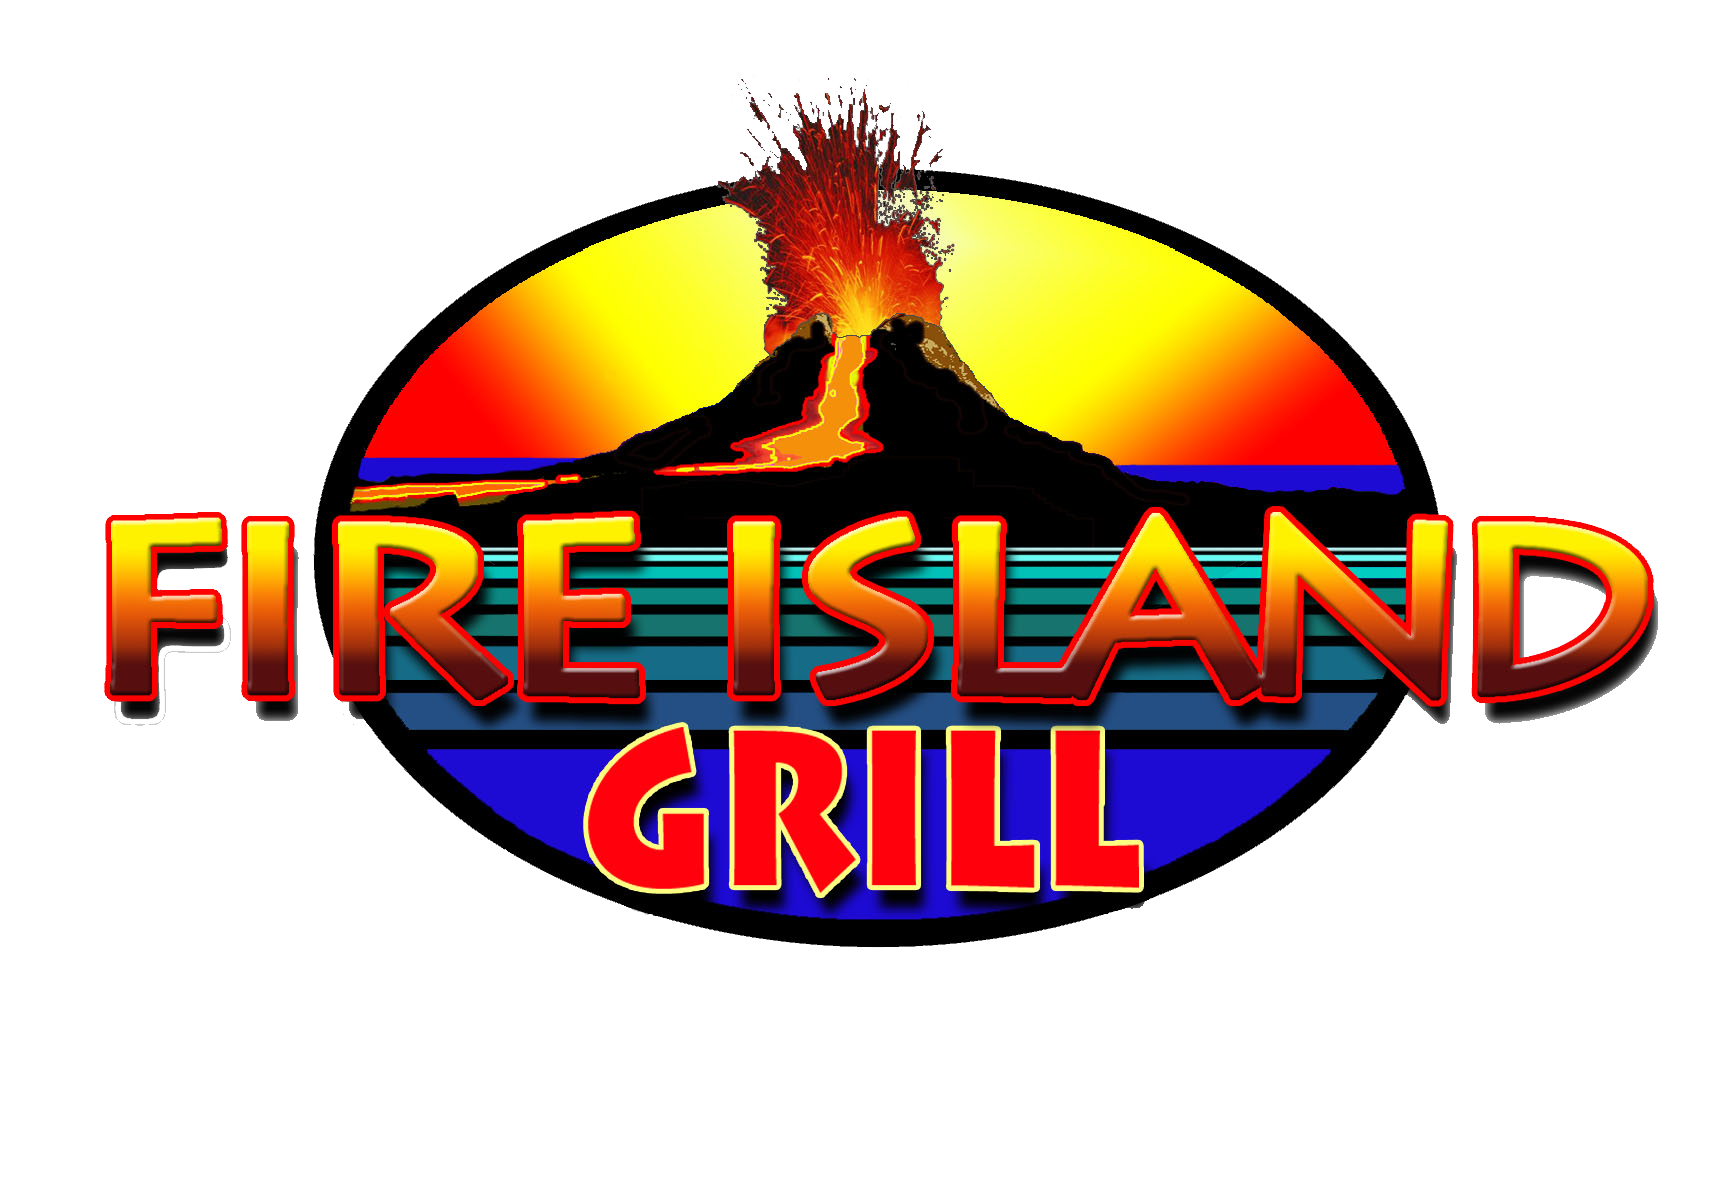 Fire Island Grill logo.